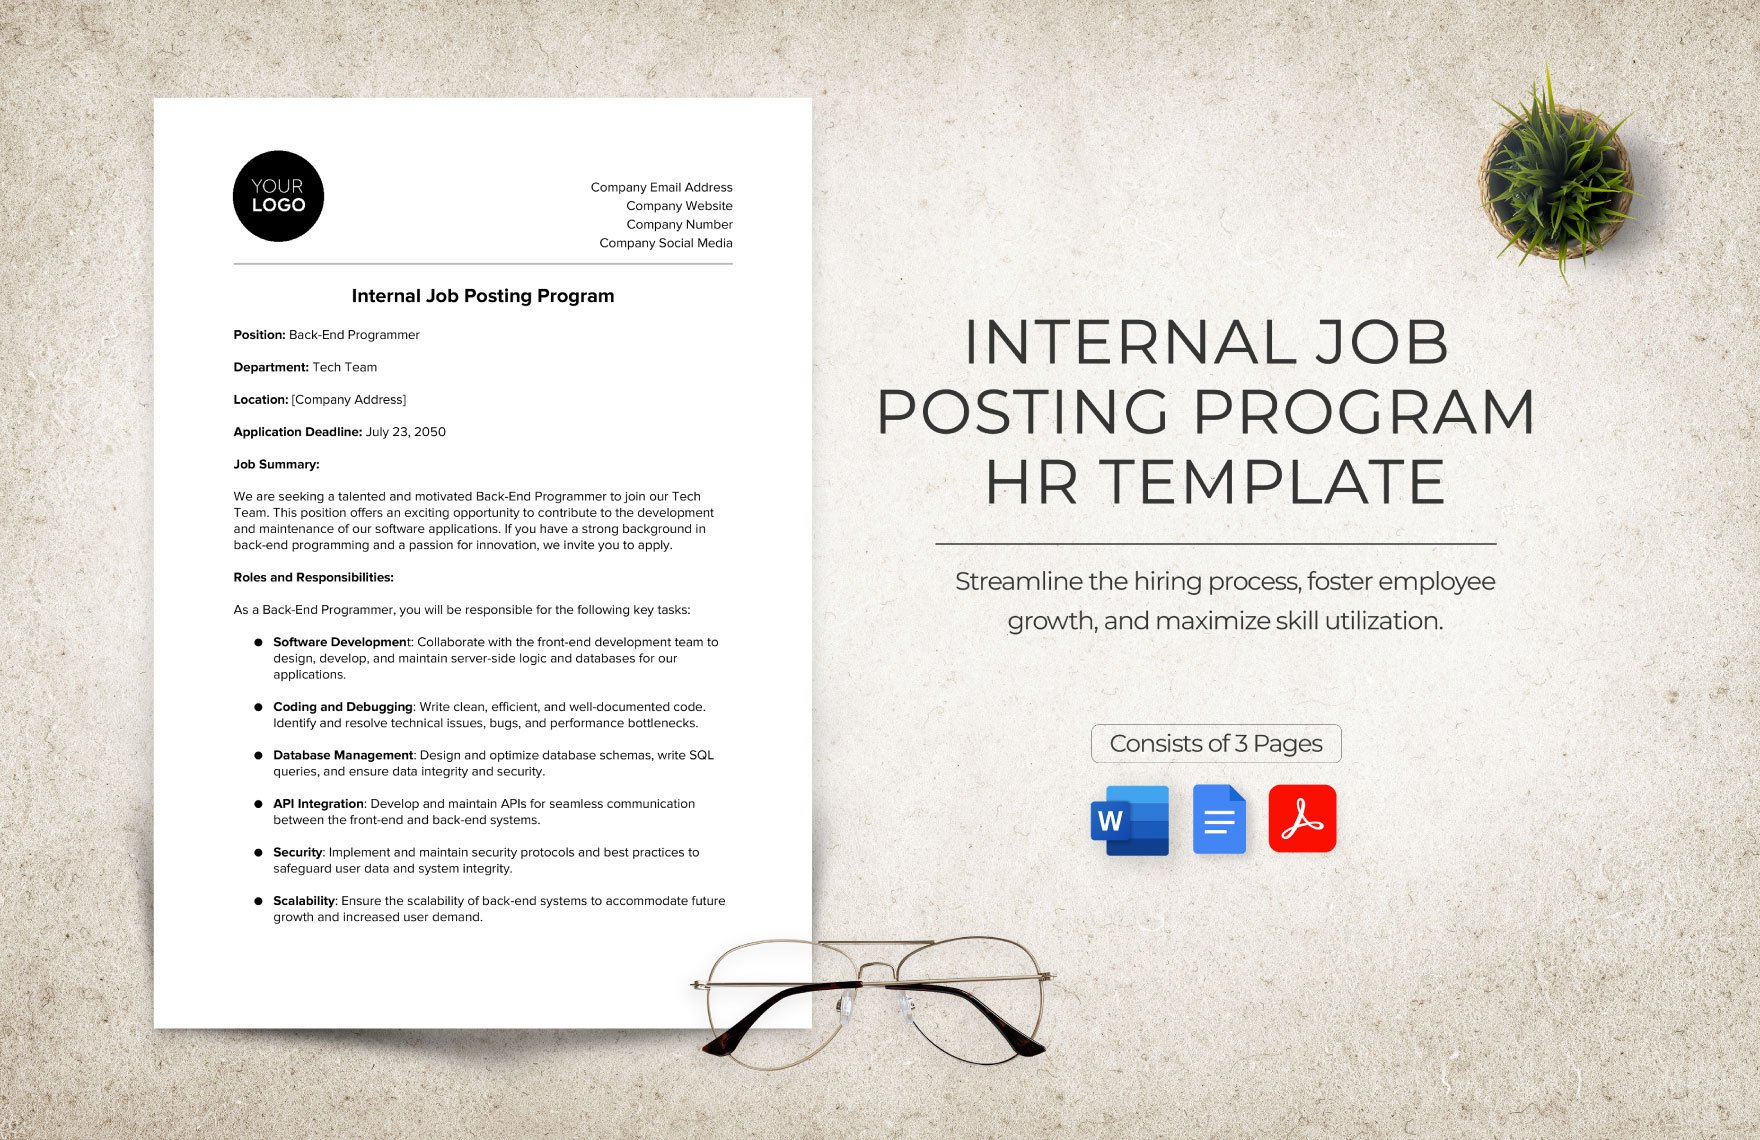 Internal Job Posting Program HR Template in Word, Google Docs, PDF